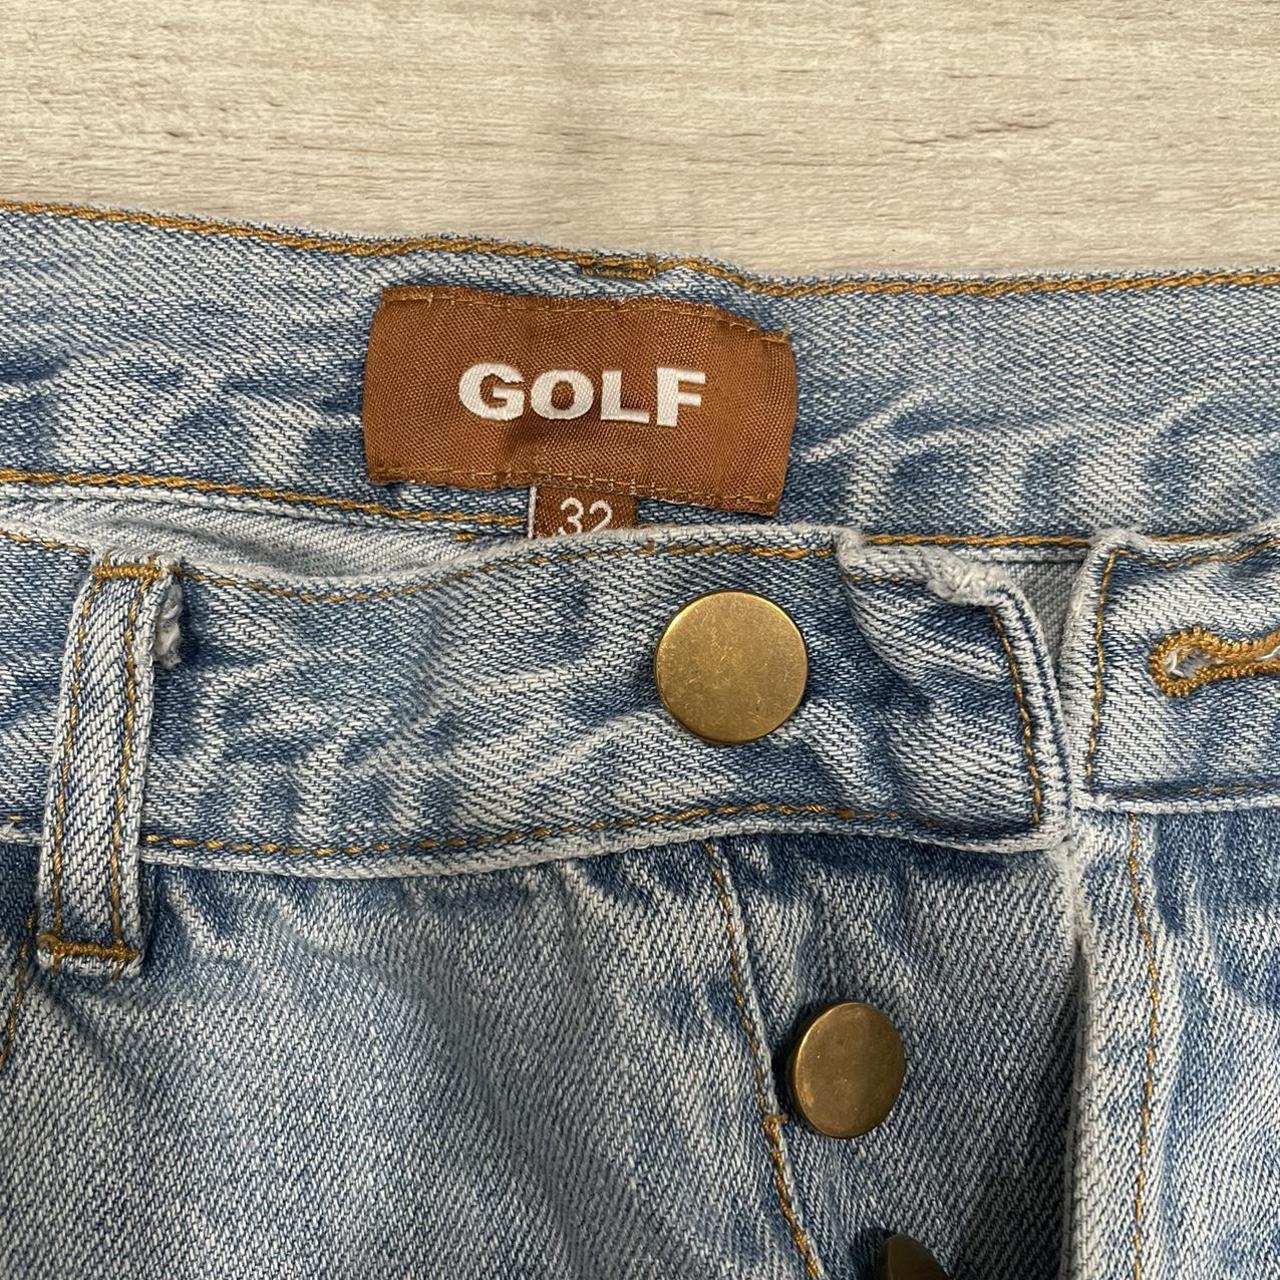 Golf Wang Smiley Denim Jeans Size 32 Very Good - Depop